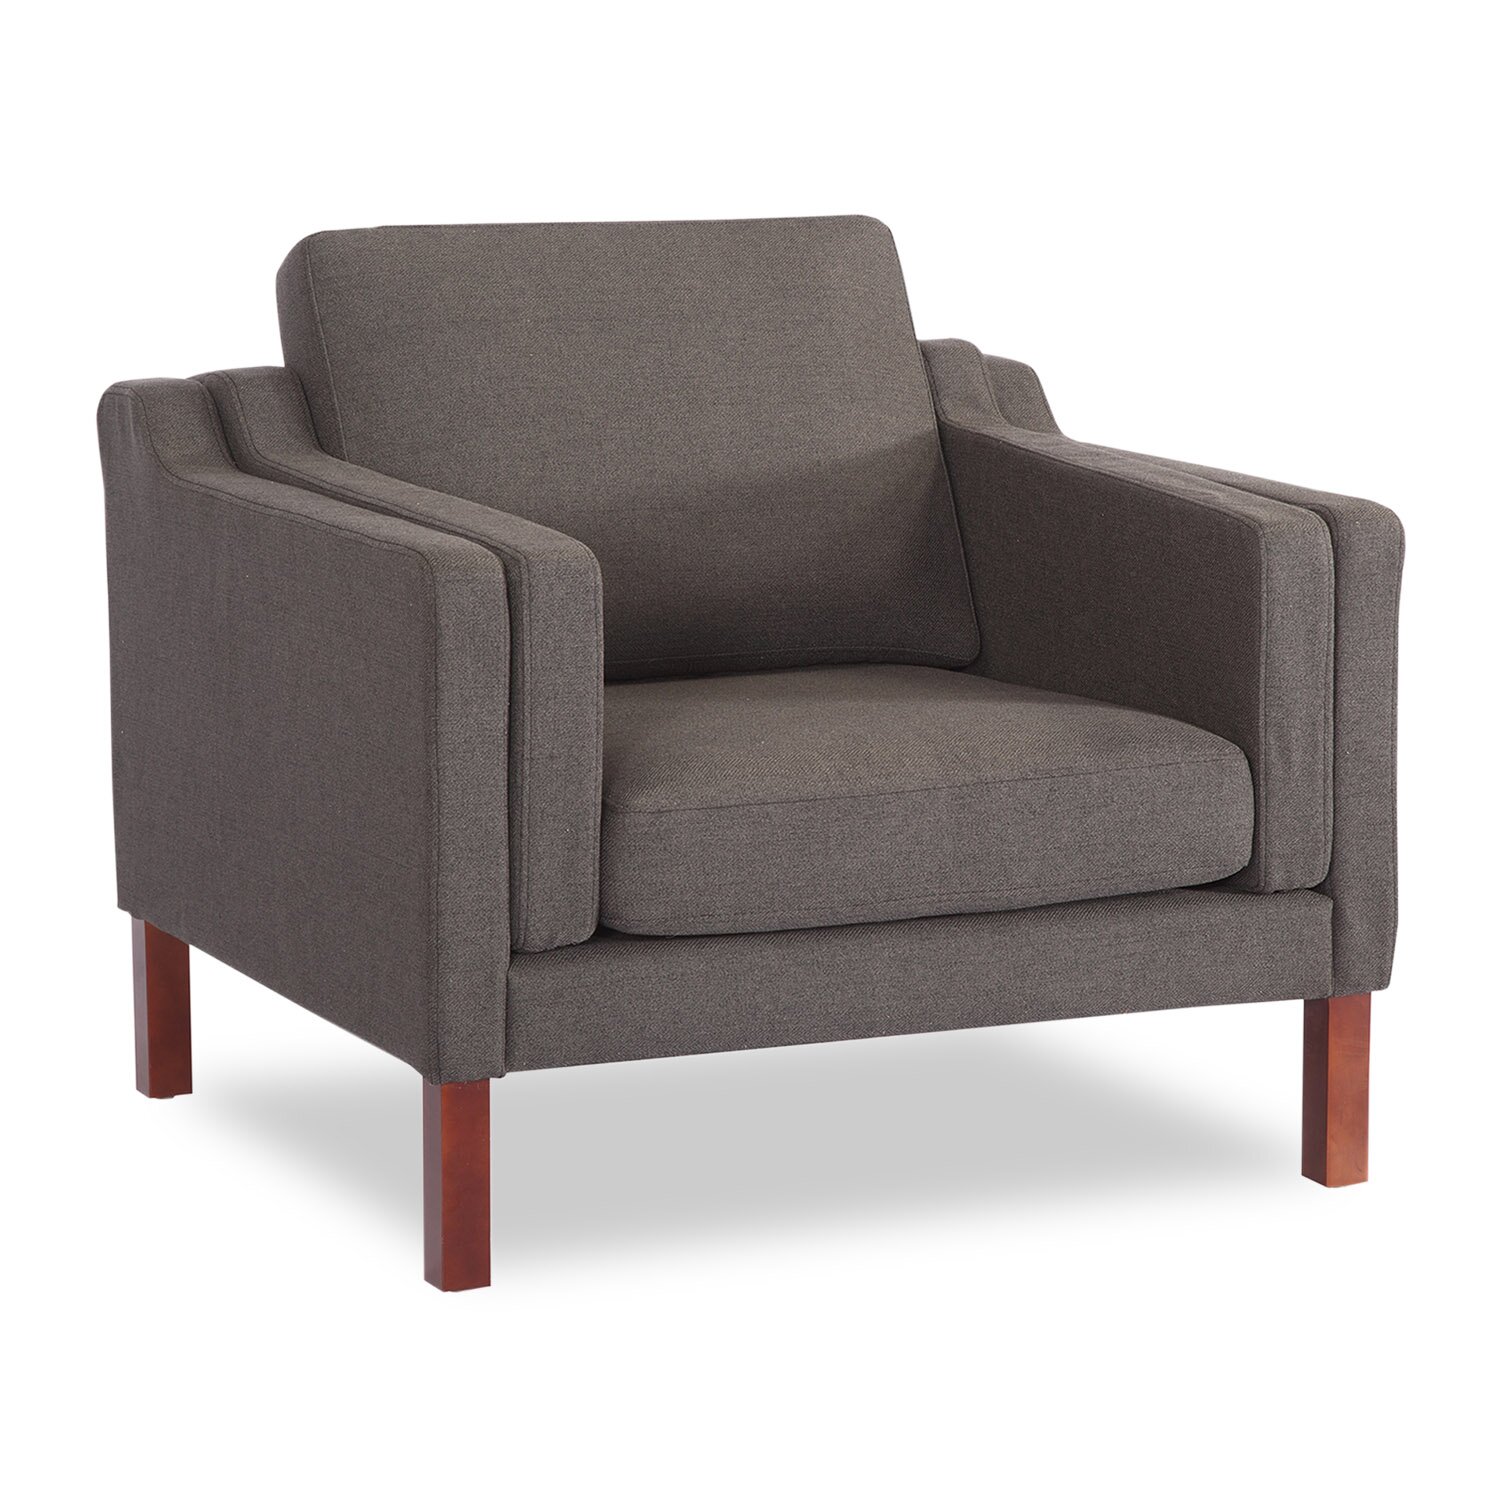 Kardiel Monroe Mid Century Modern Arm Chair | Wayfair.ca